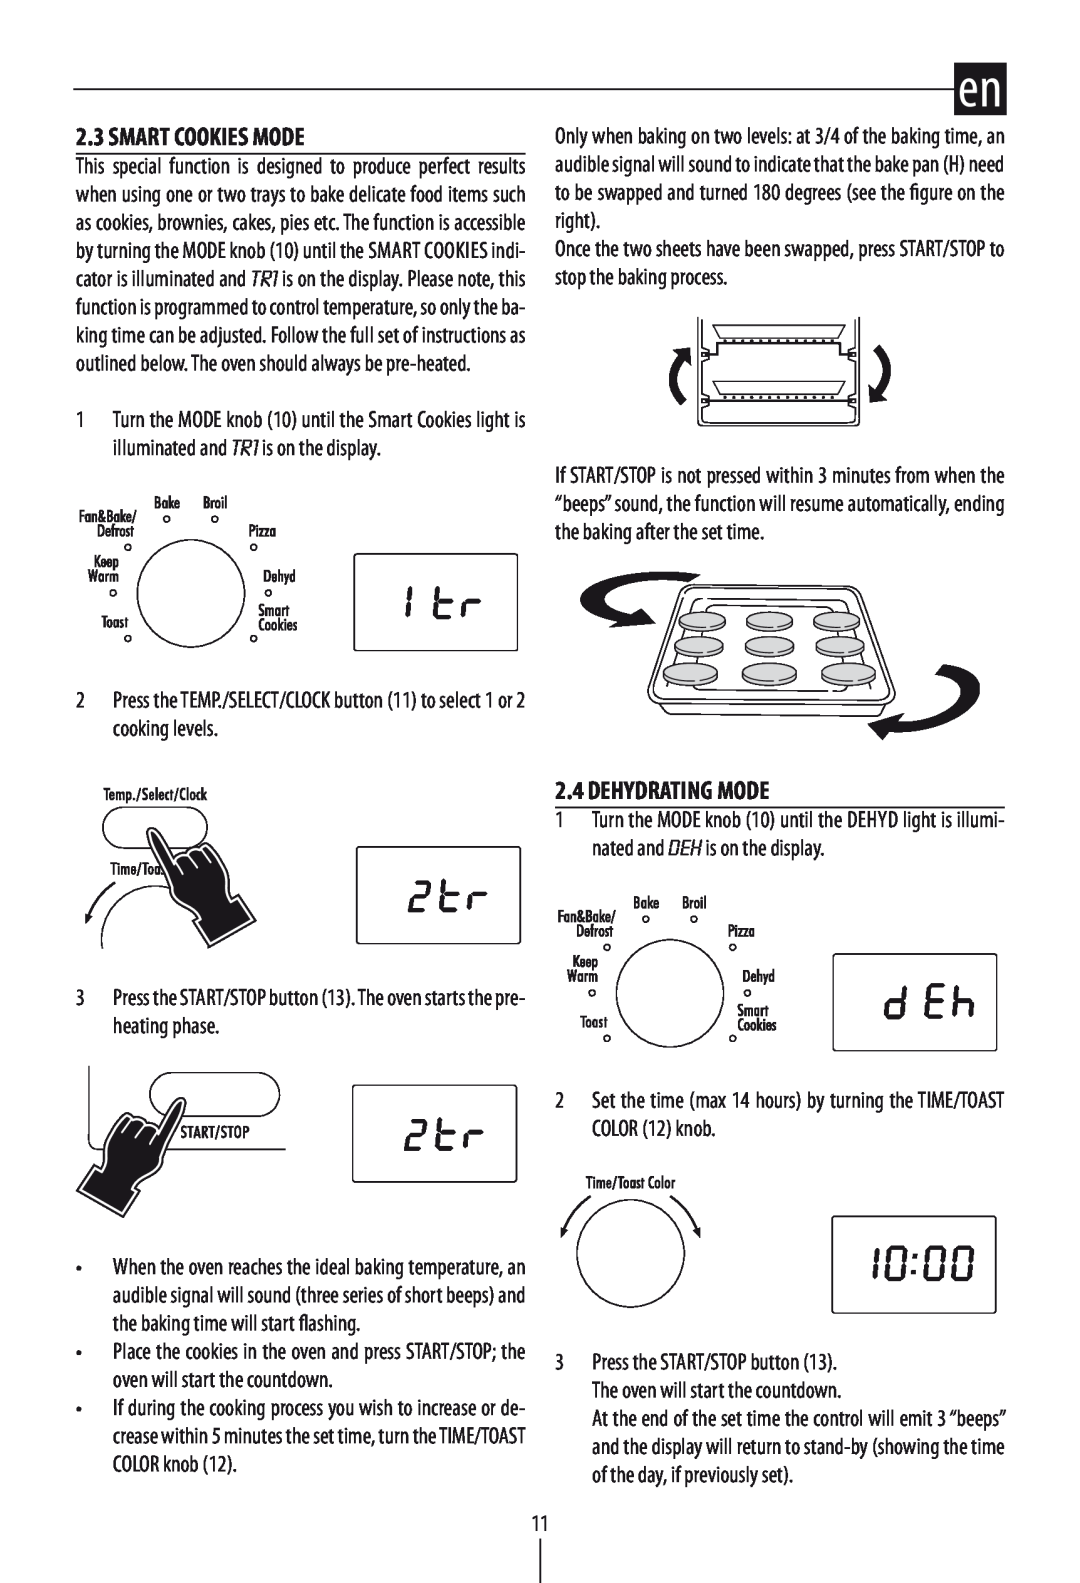 DeLonghi DO1289 manual Smart Cookies Mode, Dehydrating Mode 